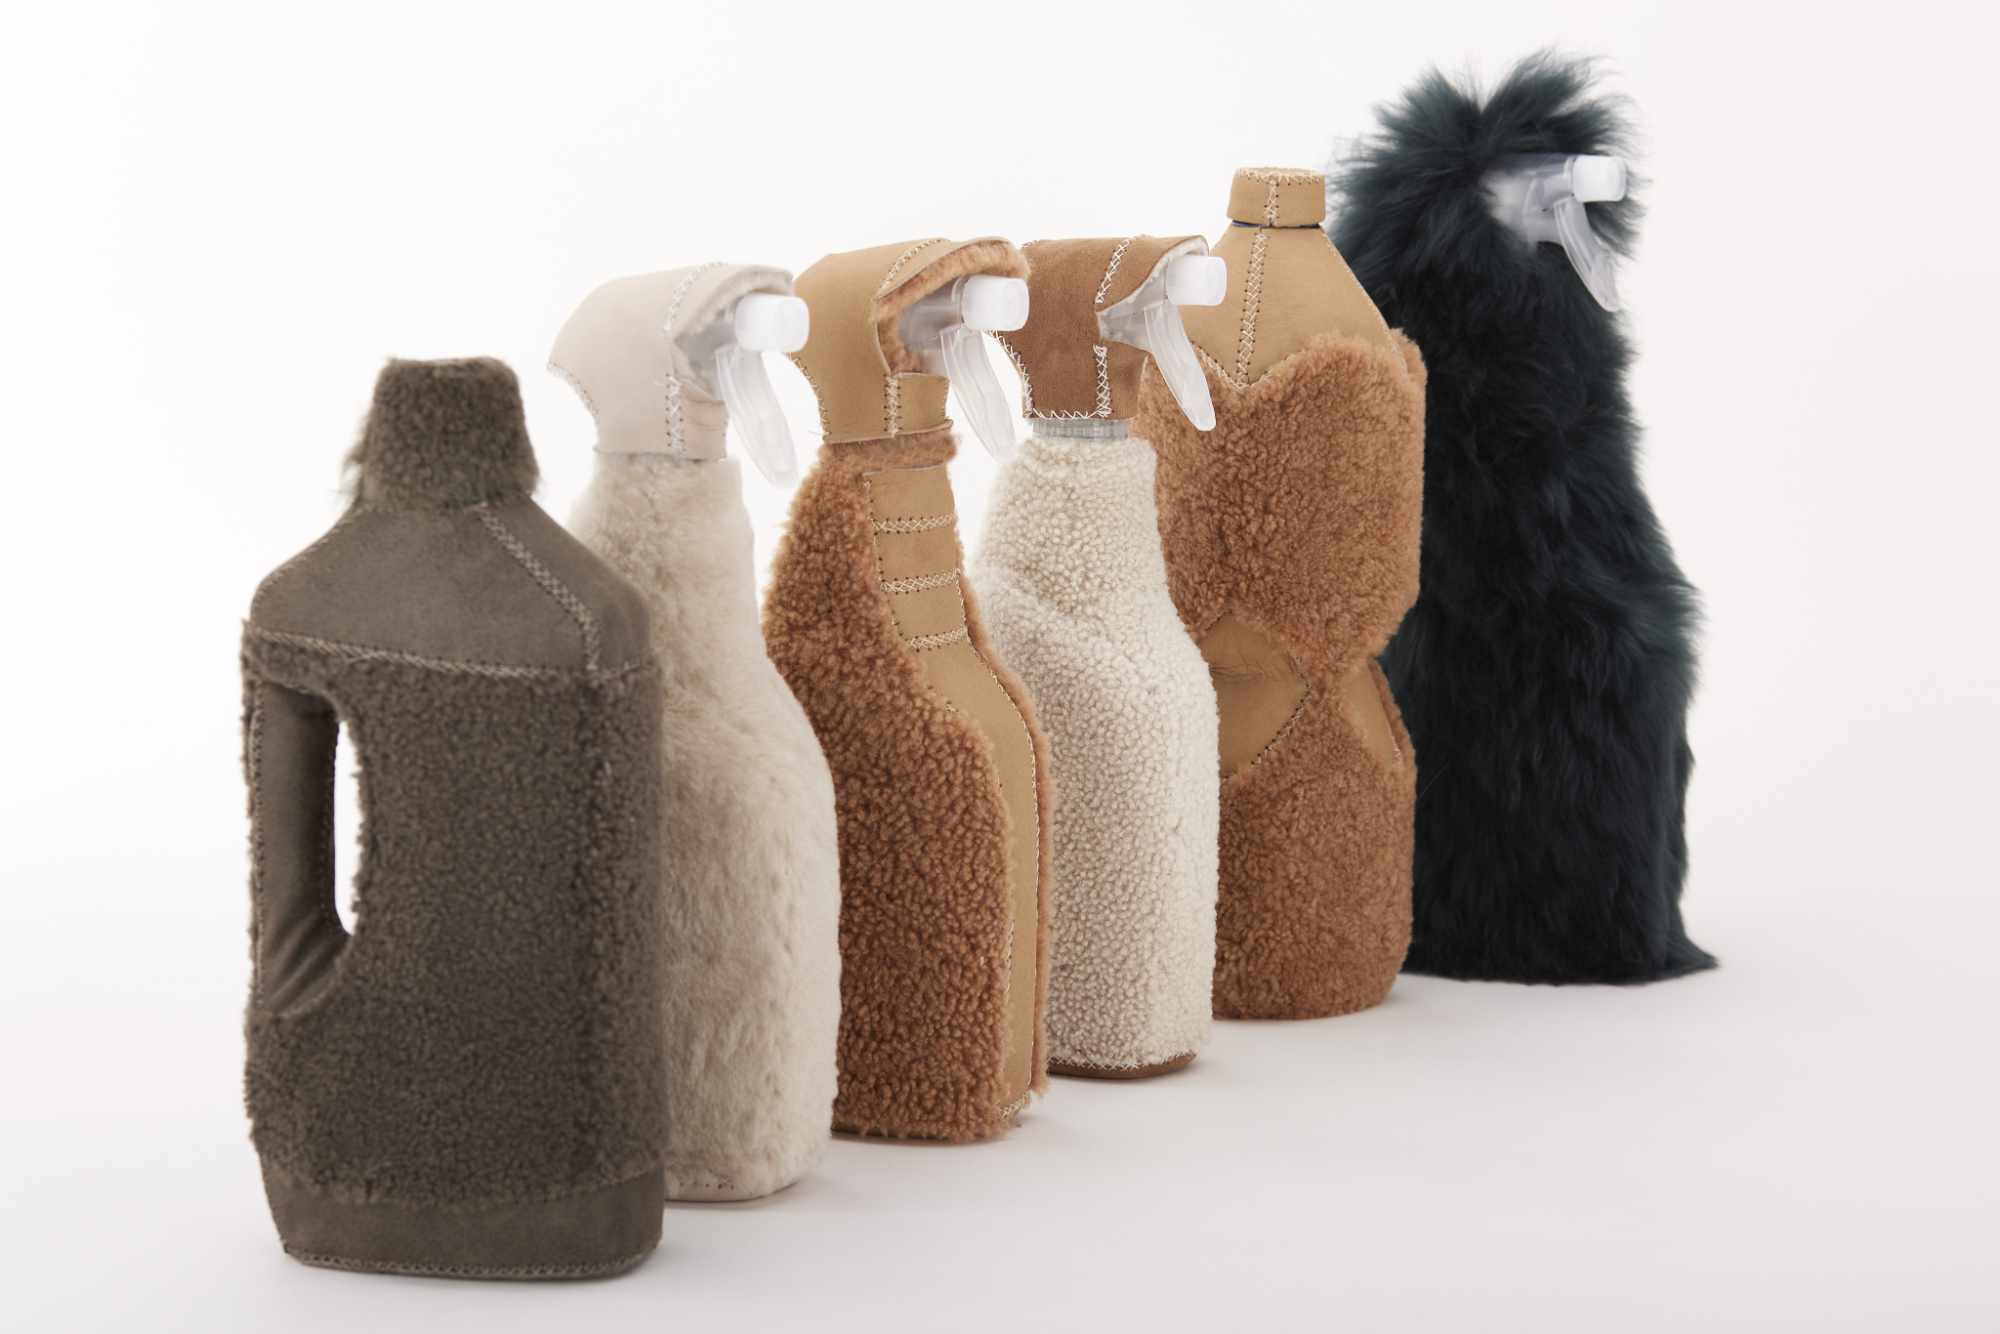 Fendi & BLESS' collaborative Peekaboo bag & fur-trimmed spray bottles